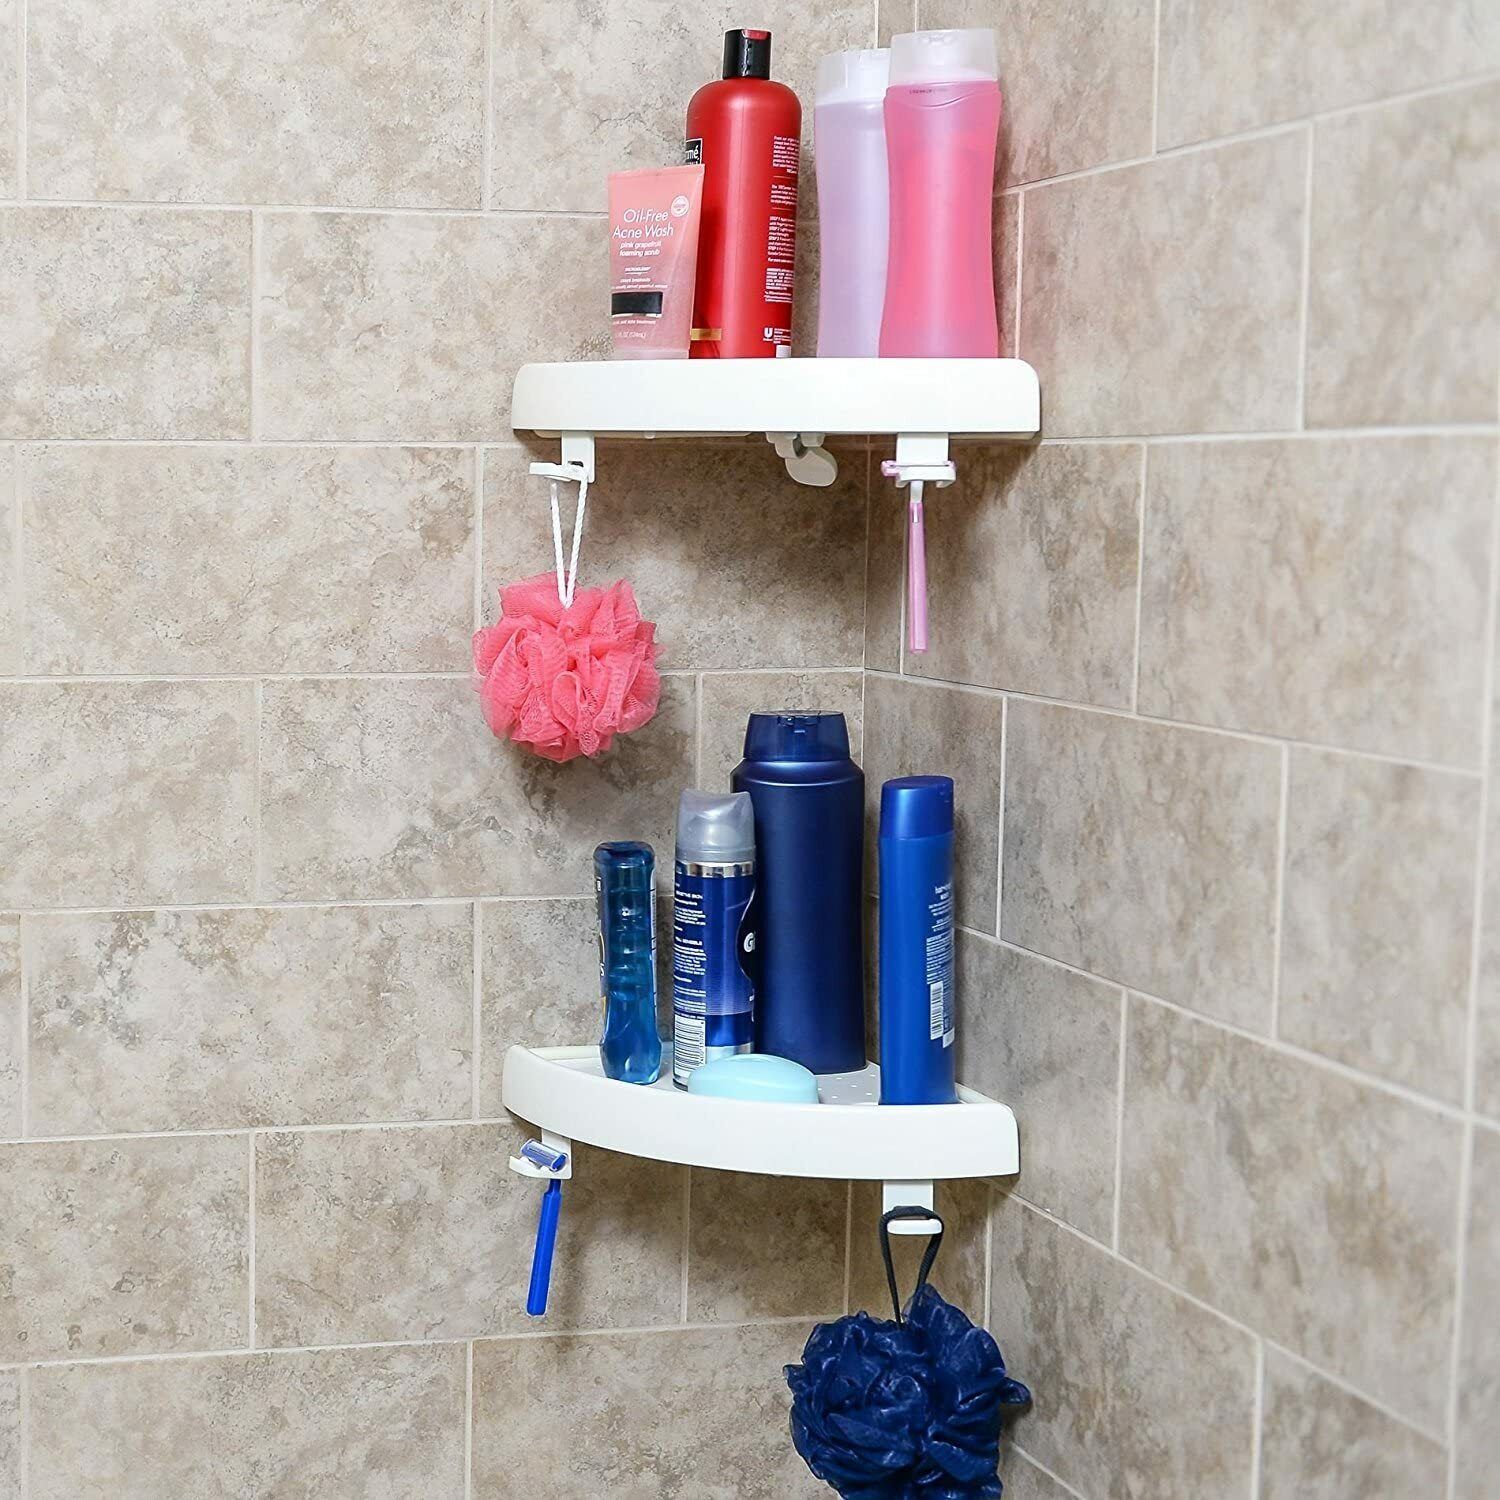 Corner Shower Shelf Bathroom Snap Up Bath Wall Corner Mount Storage Lot of 2 SnapUp Shelf Does Not Apply